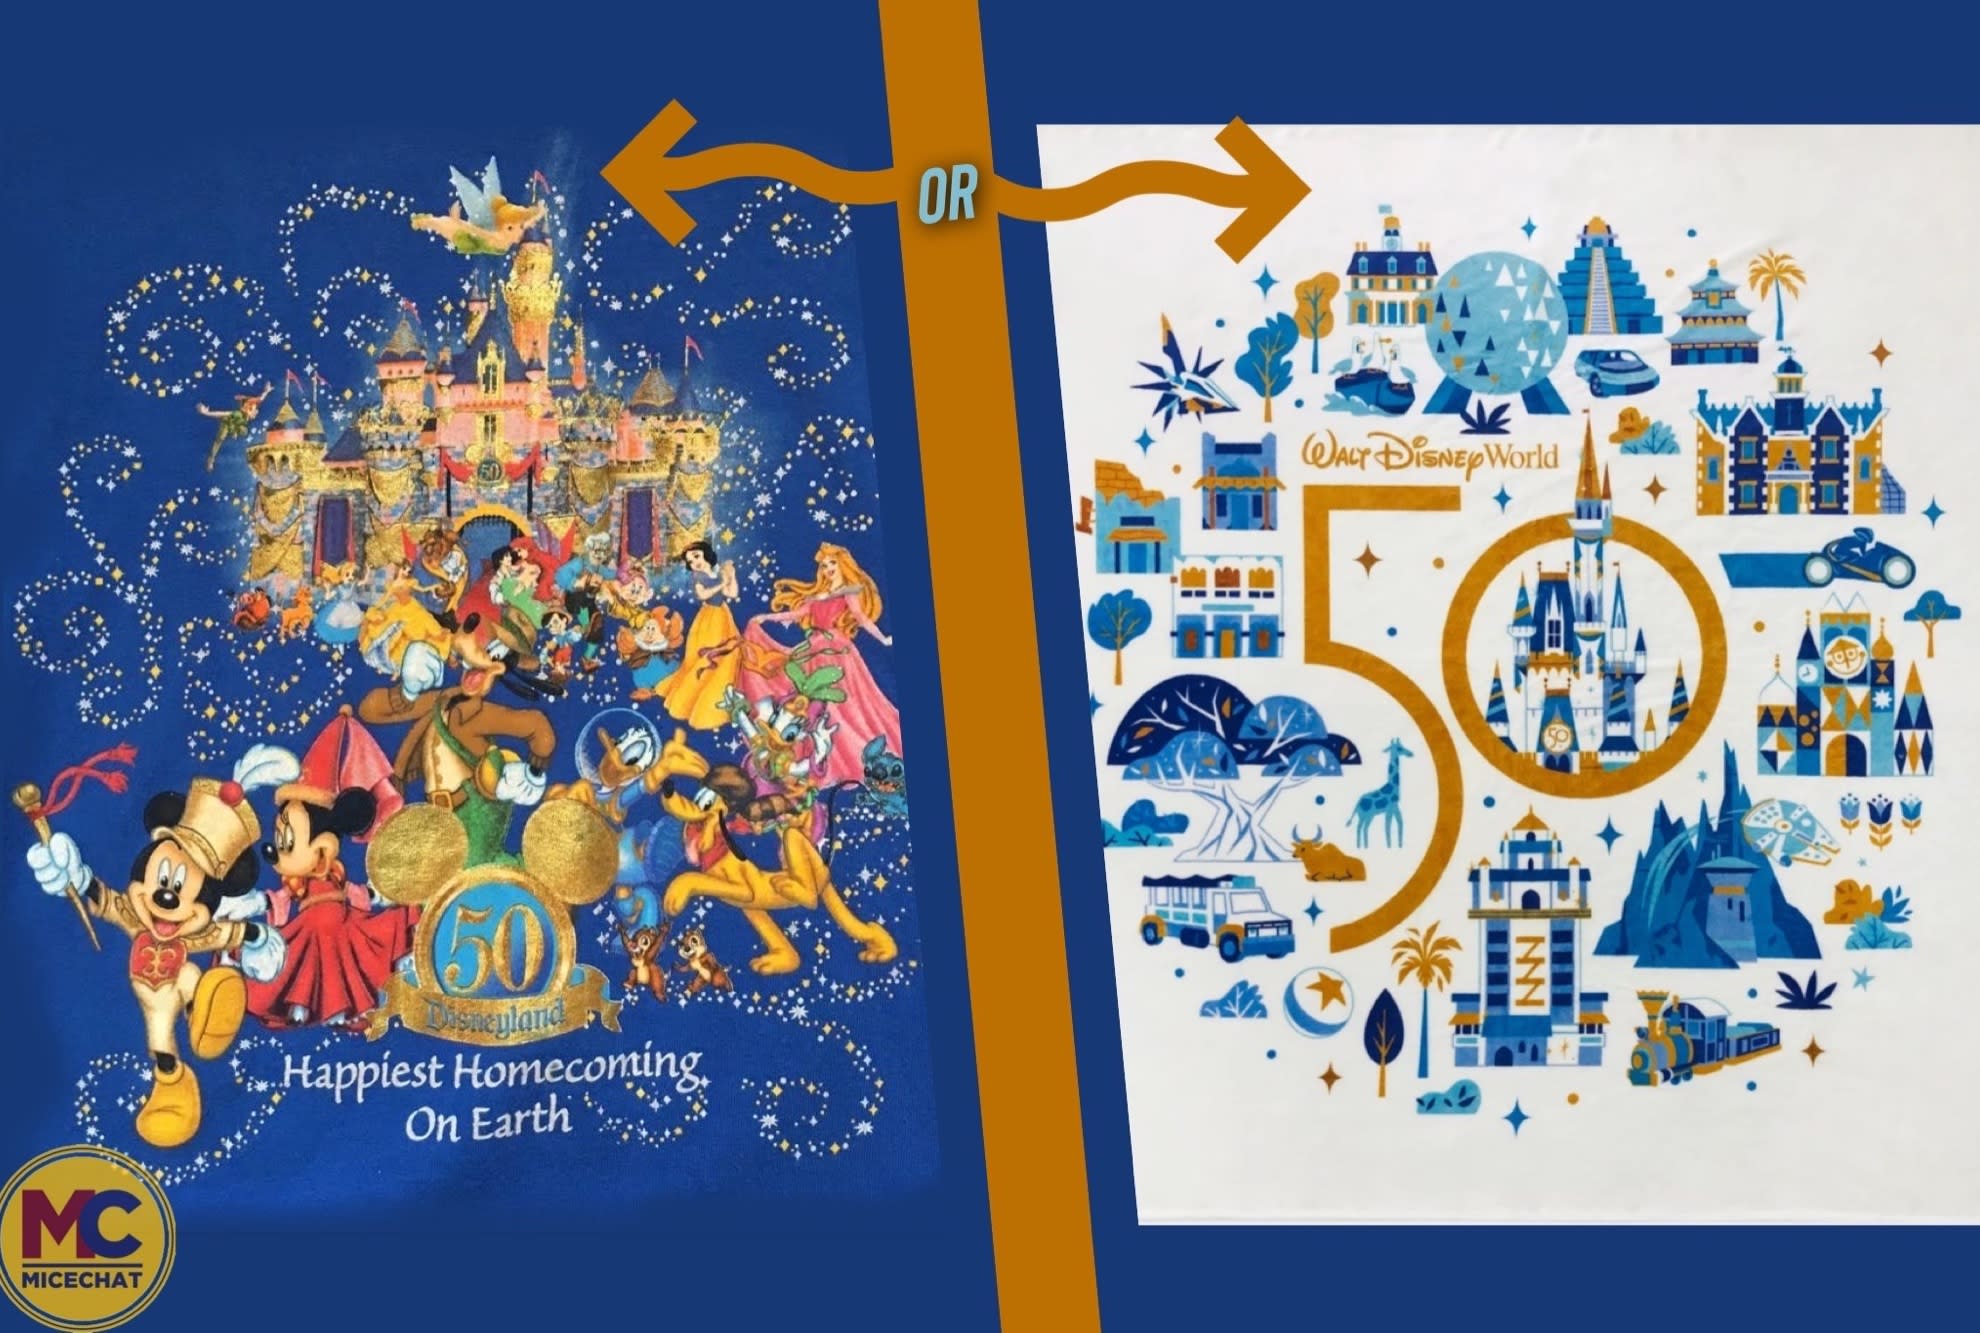 Who Did the Best th Anniversary? Disneyland Vs. Walt Disney World